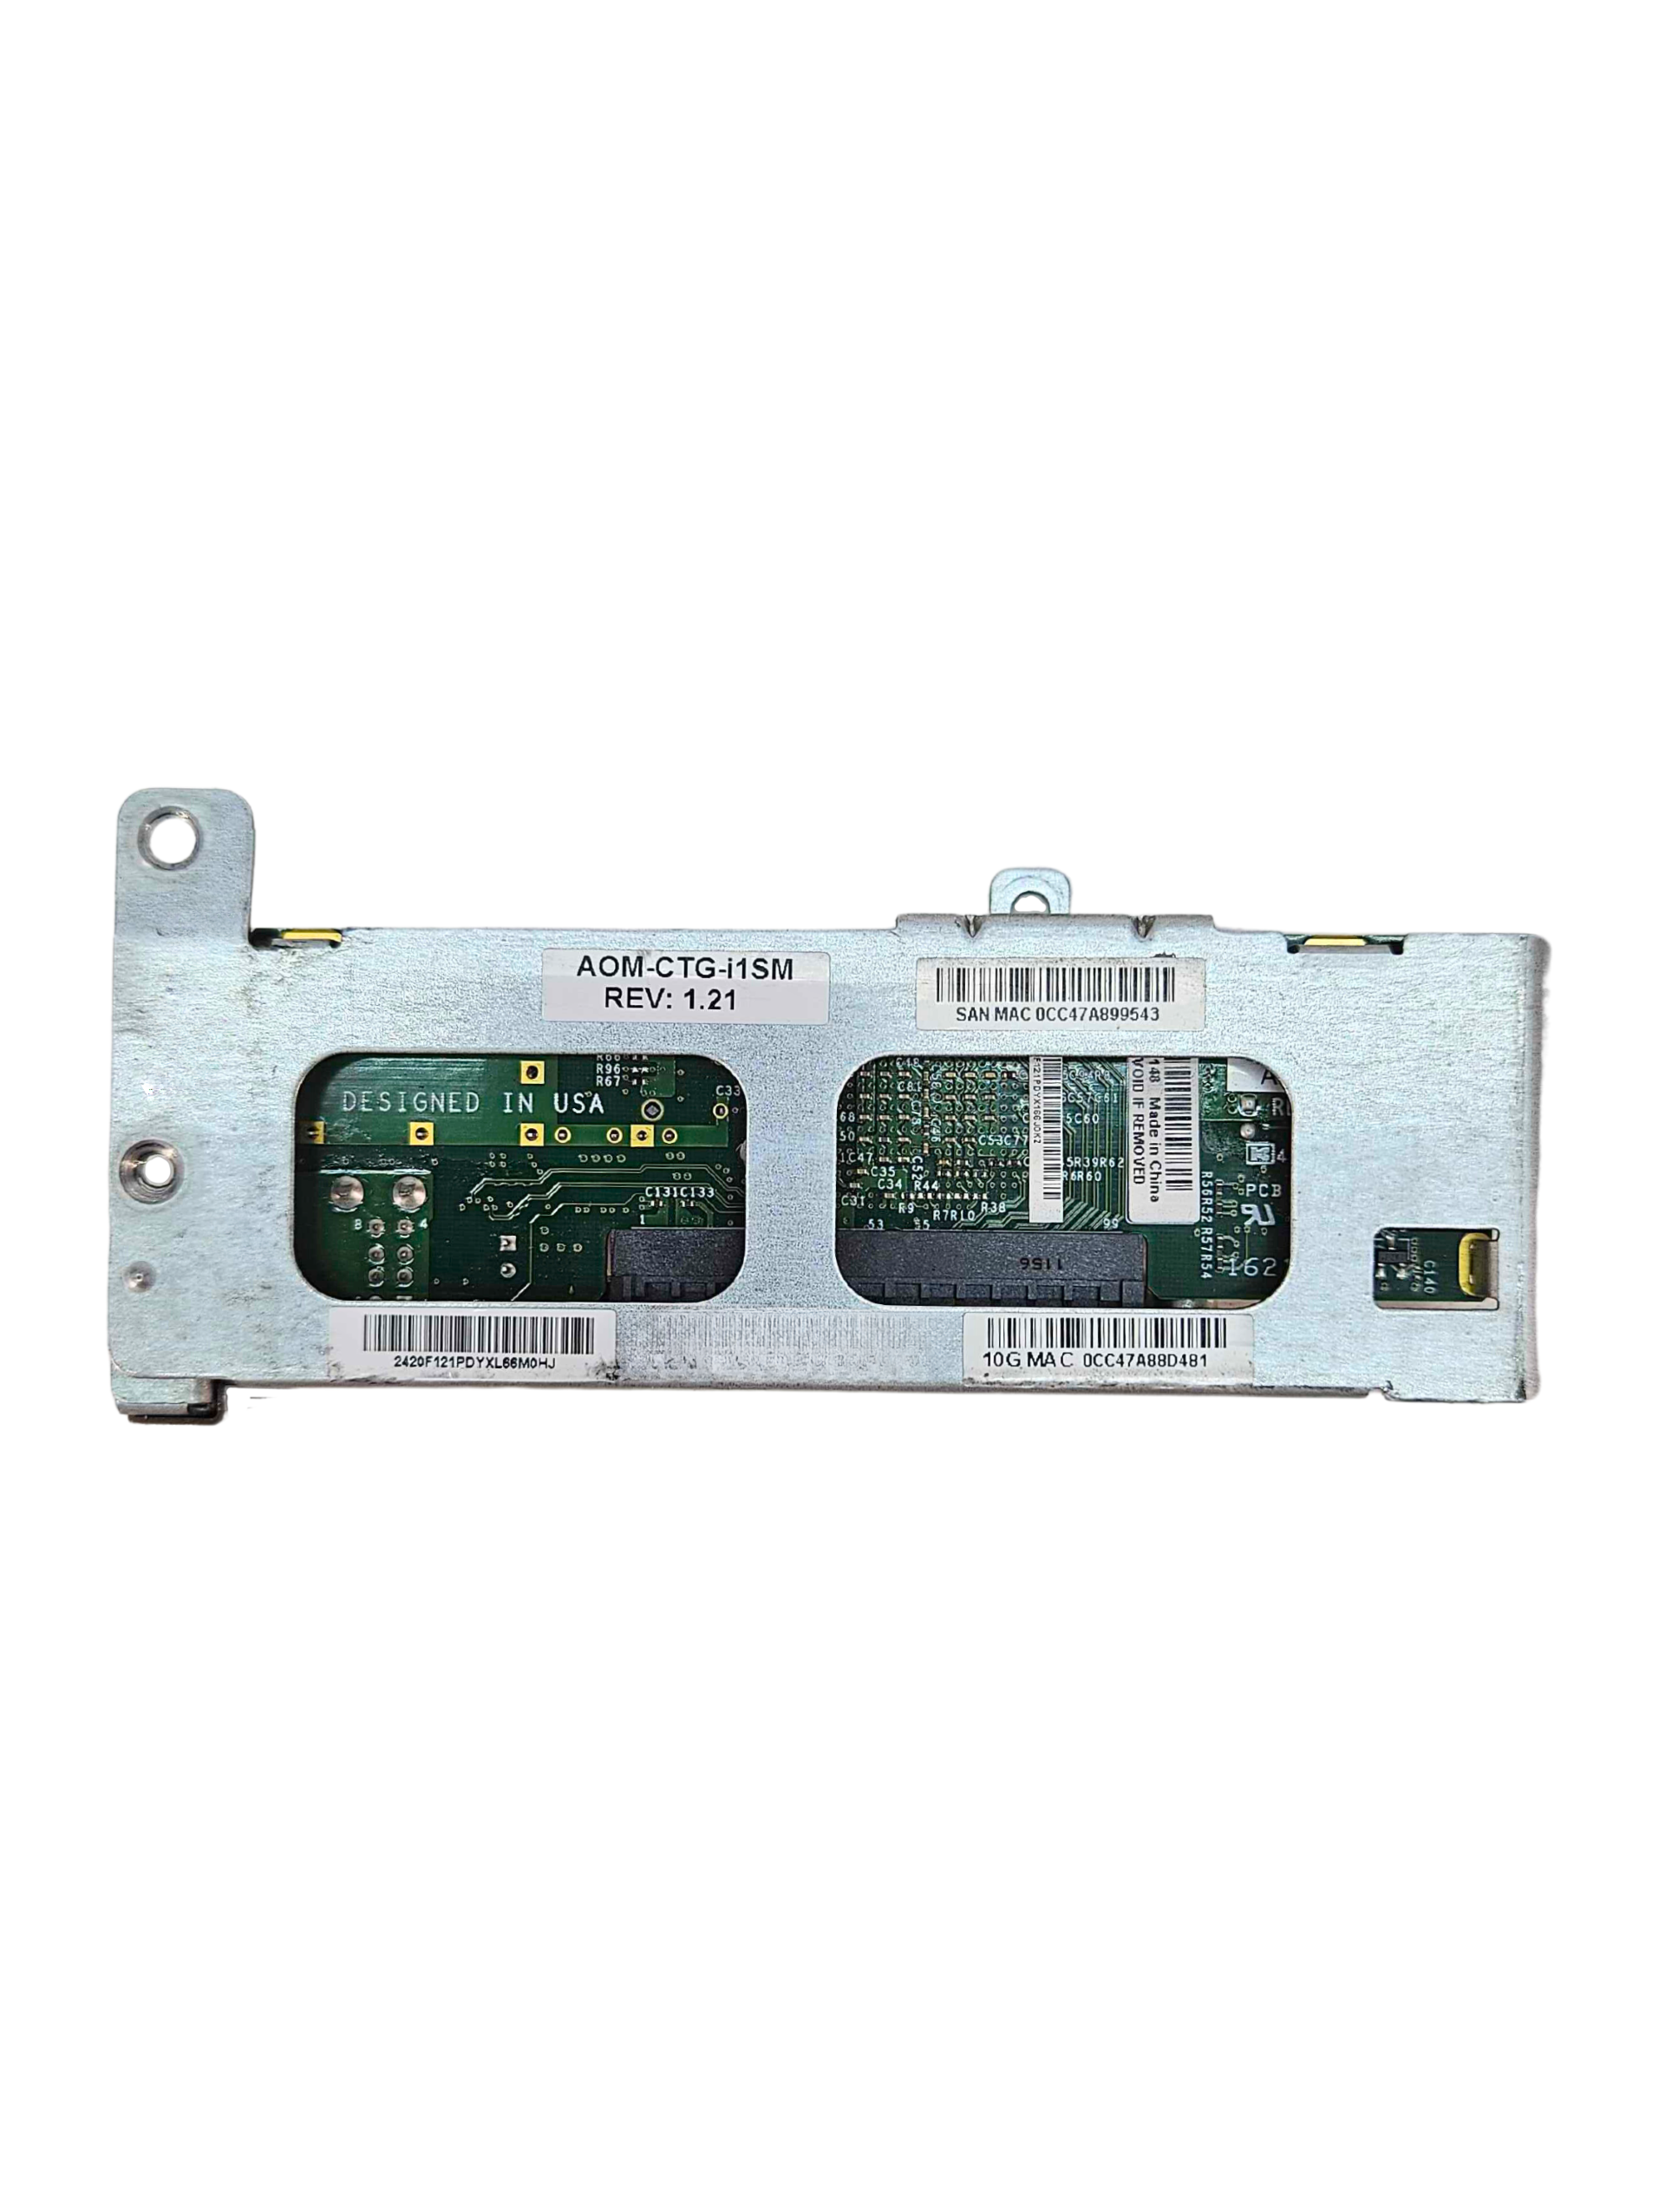 MicroLP 10GbE SFP+ Adapter Card (AOM-CTG-i1SM)